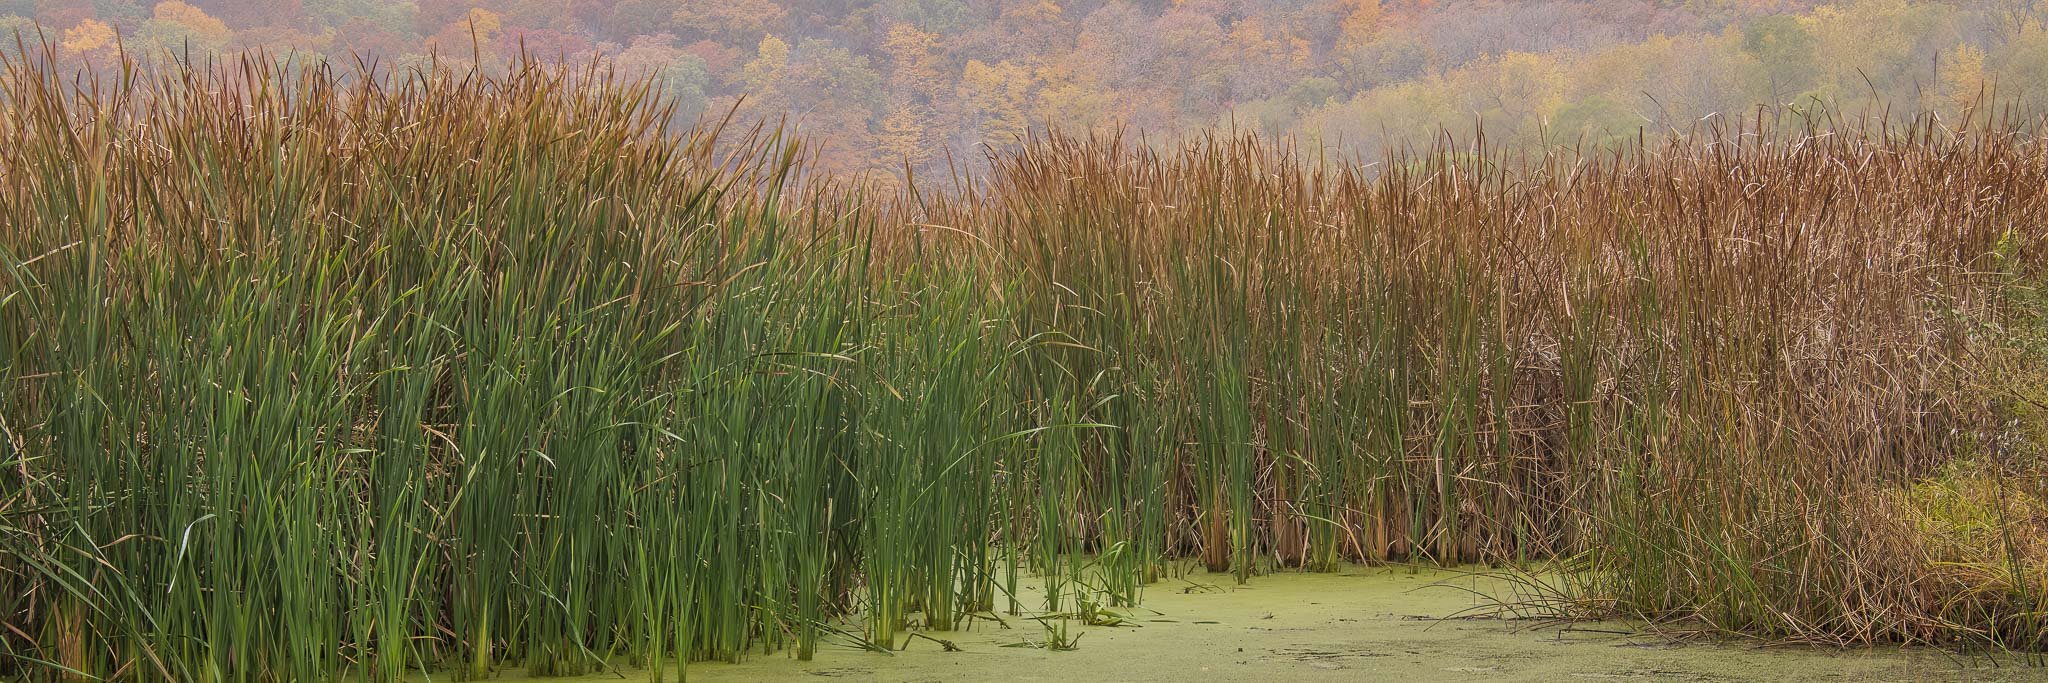  Kennekuk Heron Pond Homer  © Kim Ormsby 2022 